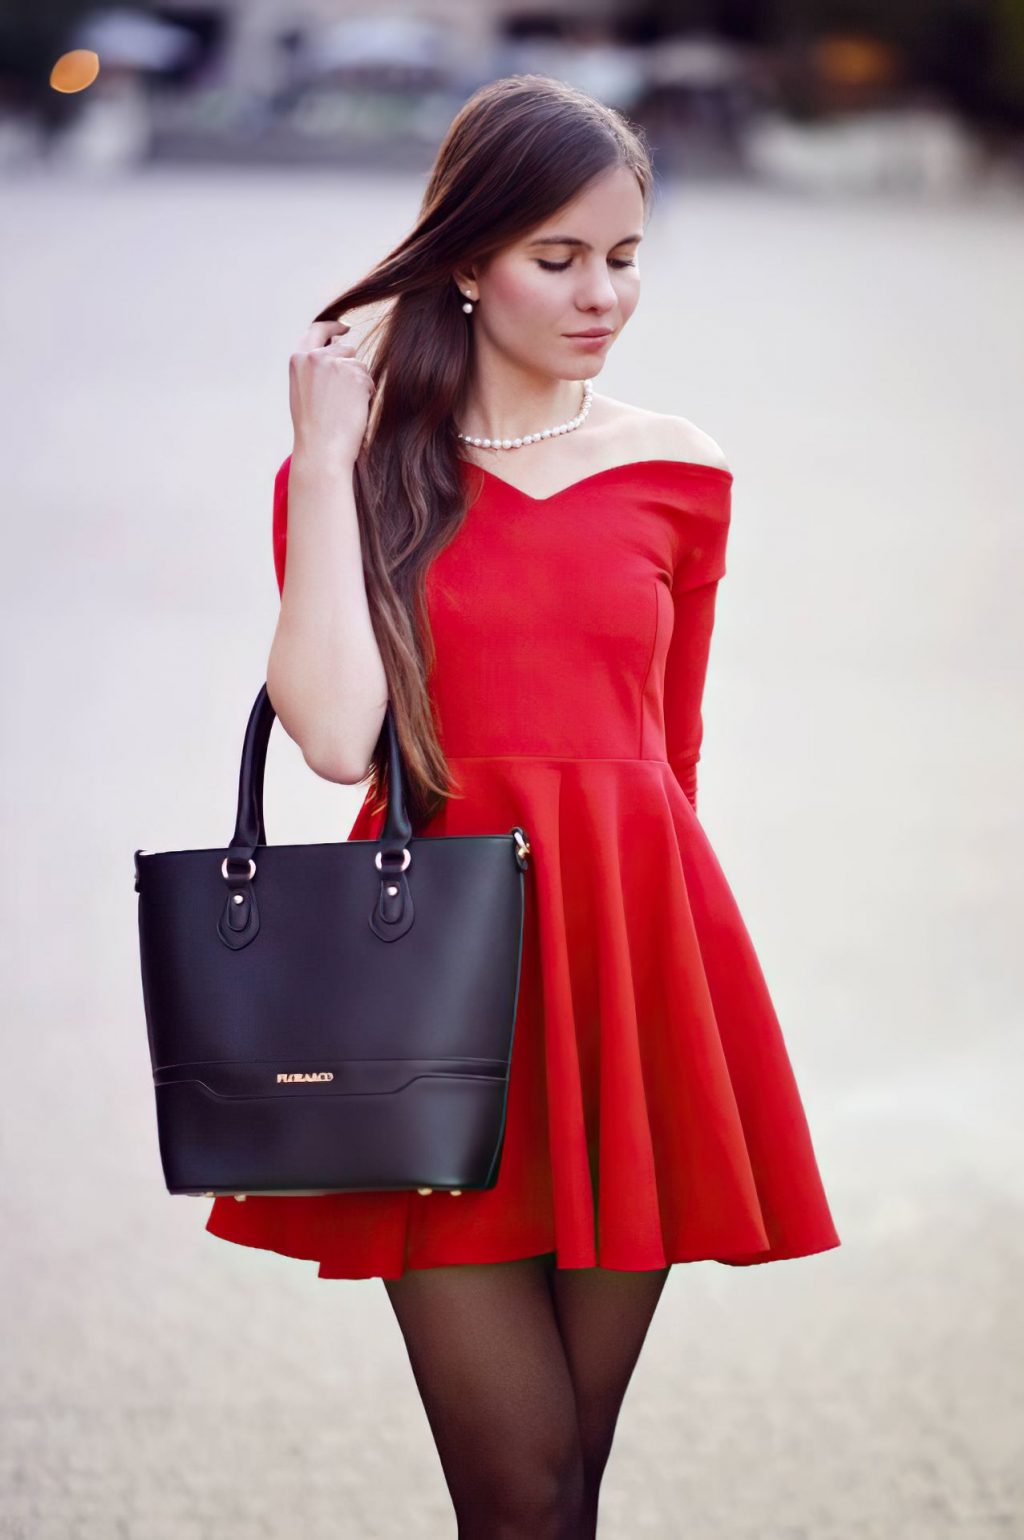 Sexy Ariadna Majewska Poses in a Red Dress (13 Photos)